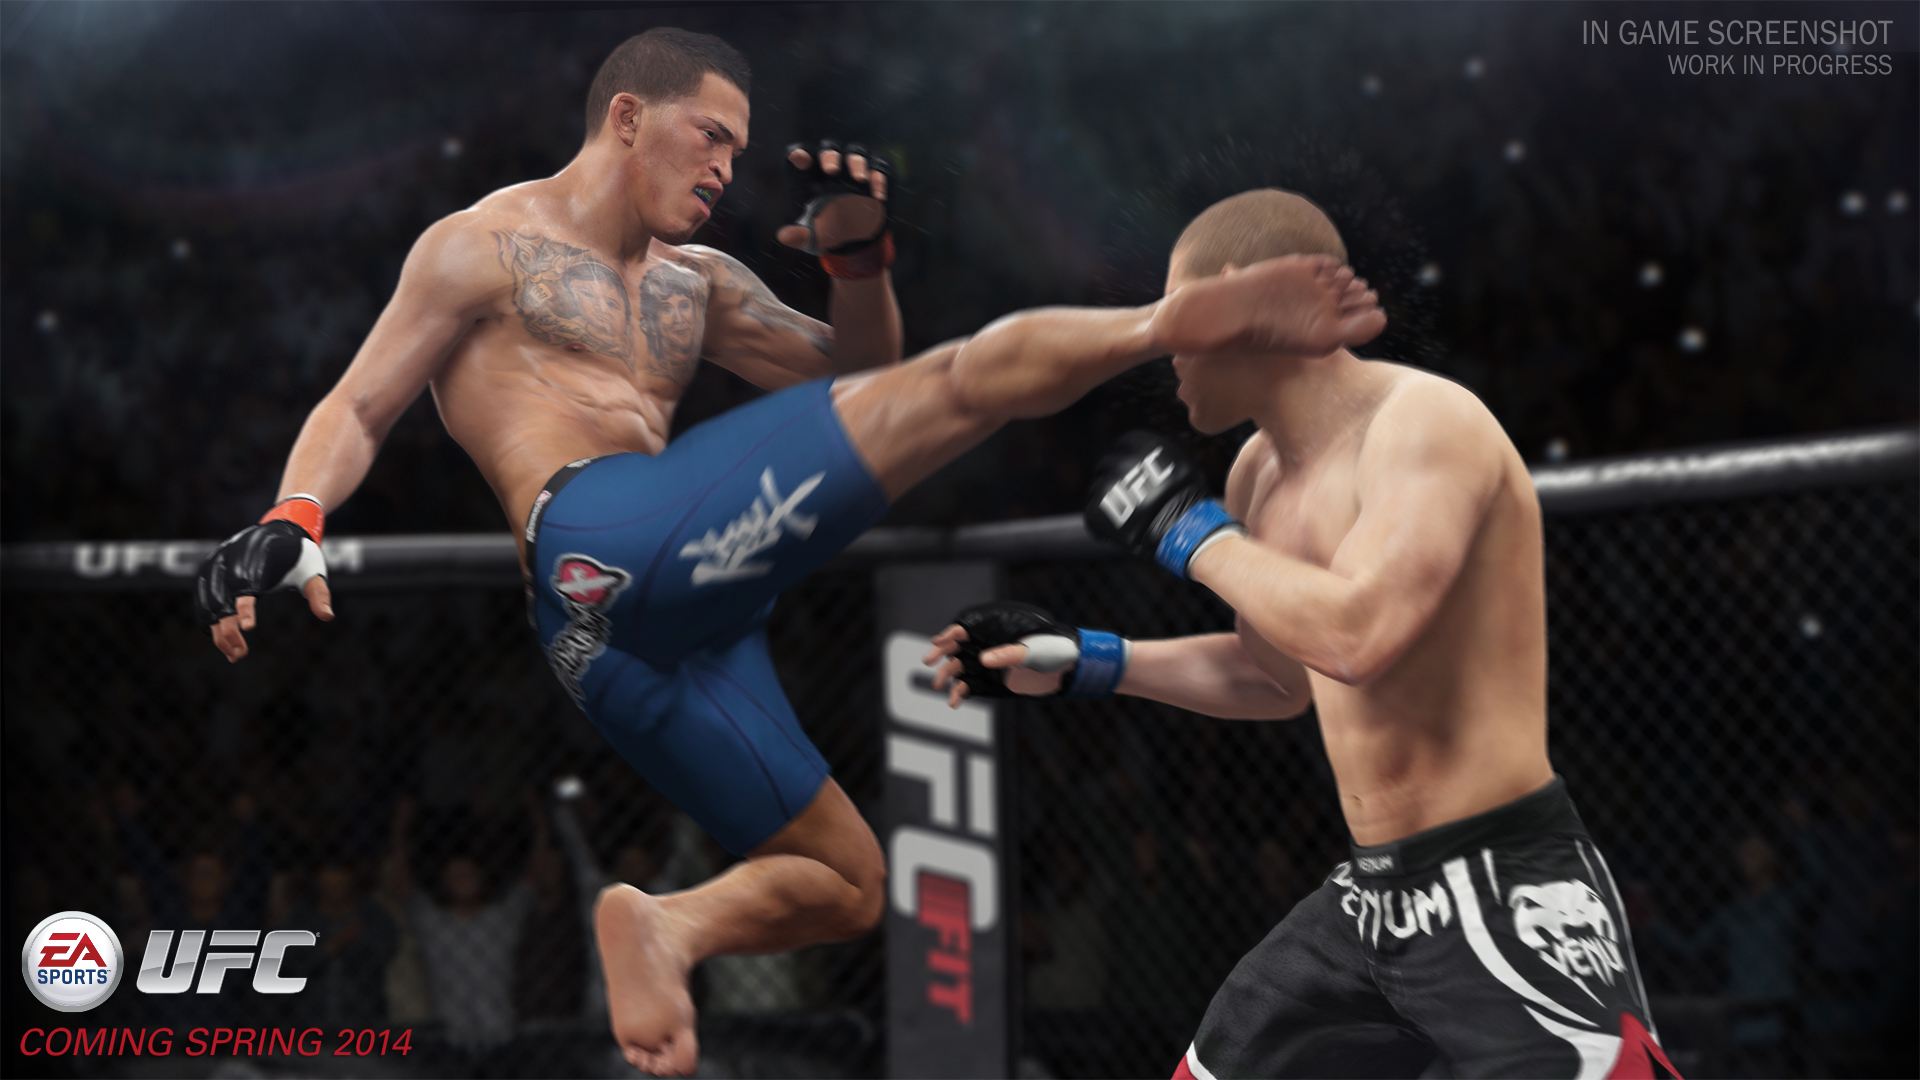 http://playsense.nl/wp-content/uploads/2014/02/EA-Sports-UFC-01.jpg